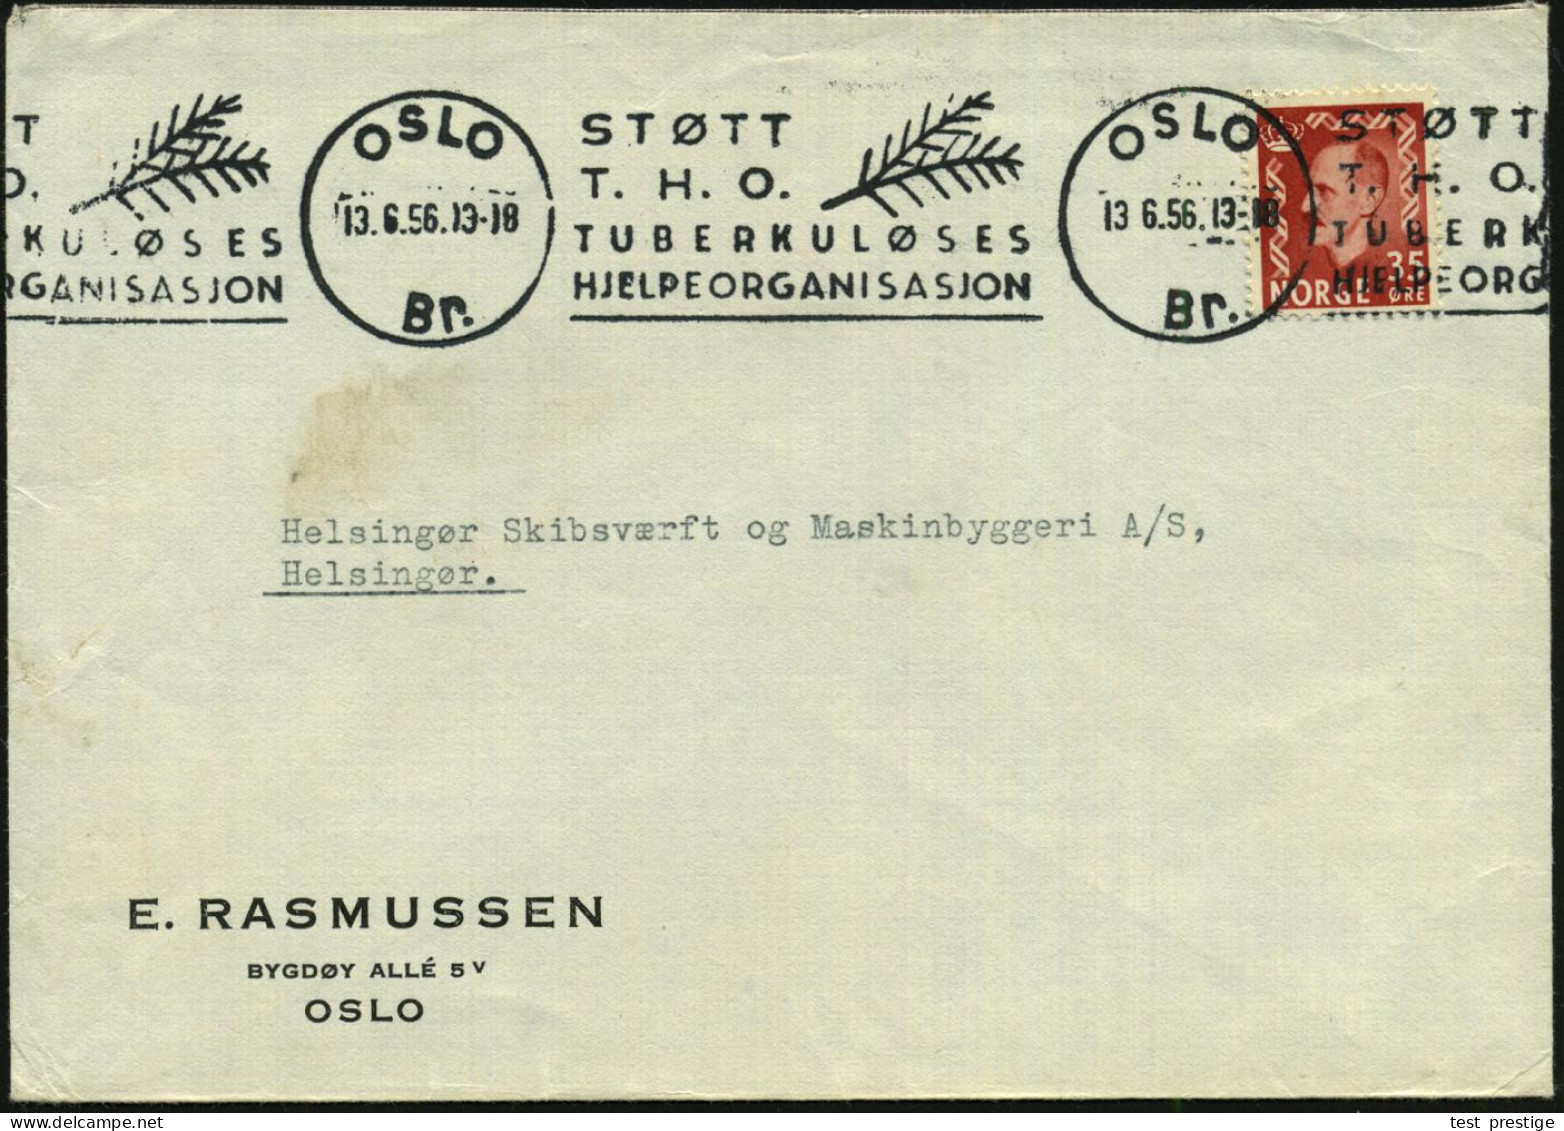 NORWEGEN 1956 (Juni) Band-MWSt: OSLO/Br./STÖTT/T.H.O./TUBERKULÖSES/HJELPEORGANISASJON (Zweig) Klar Gest. Bedarfsbf. - TU - Ziekte